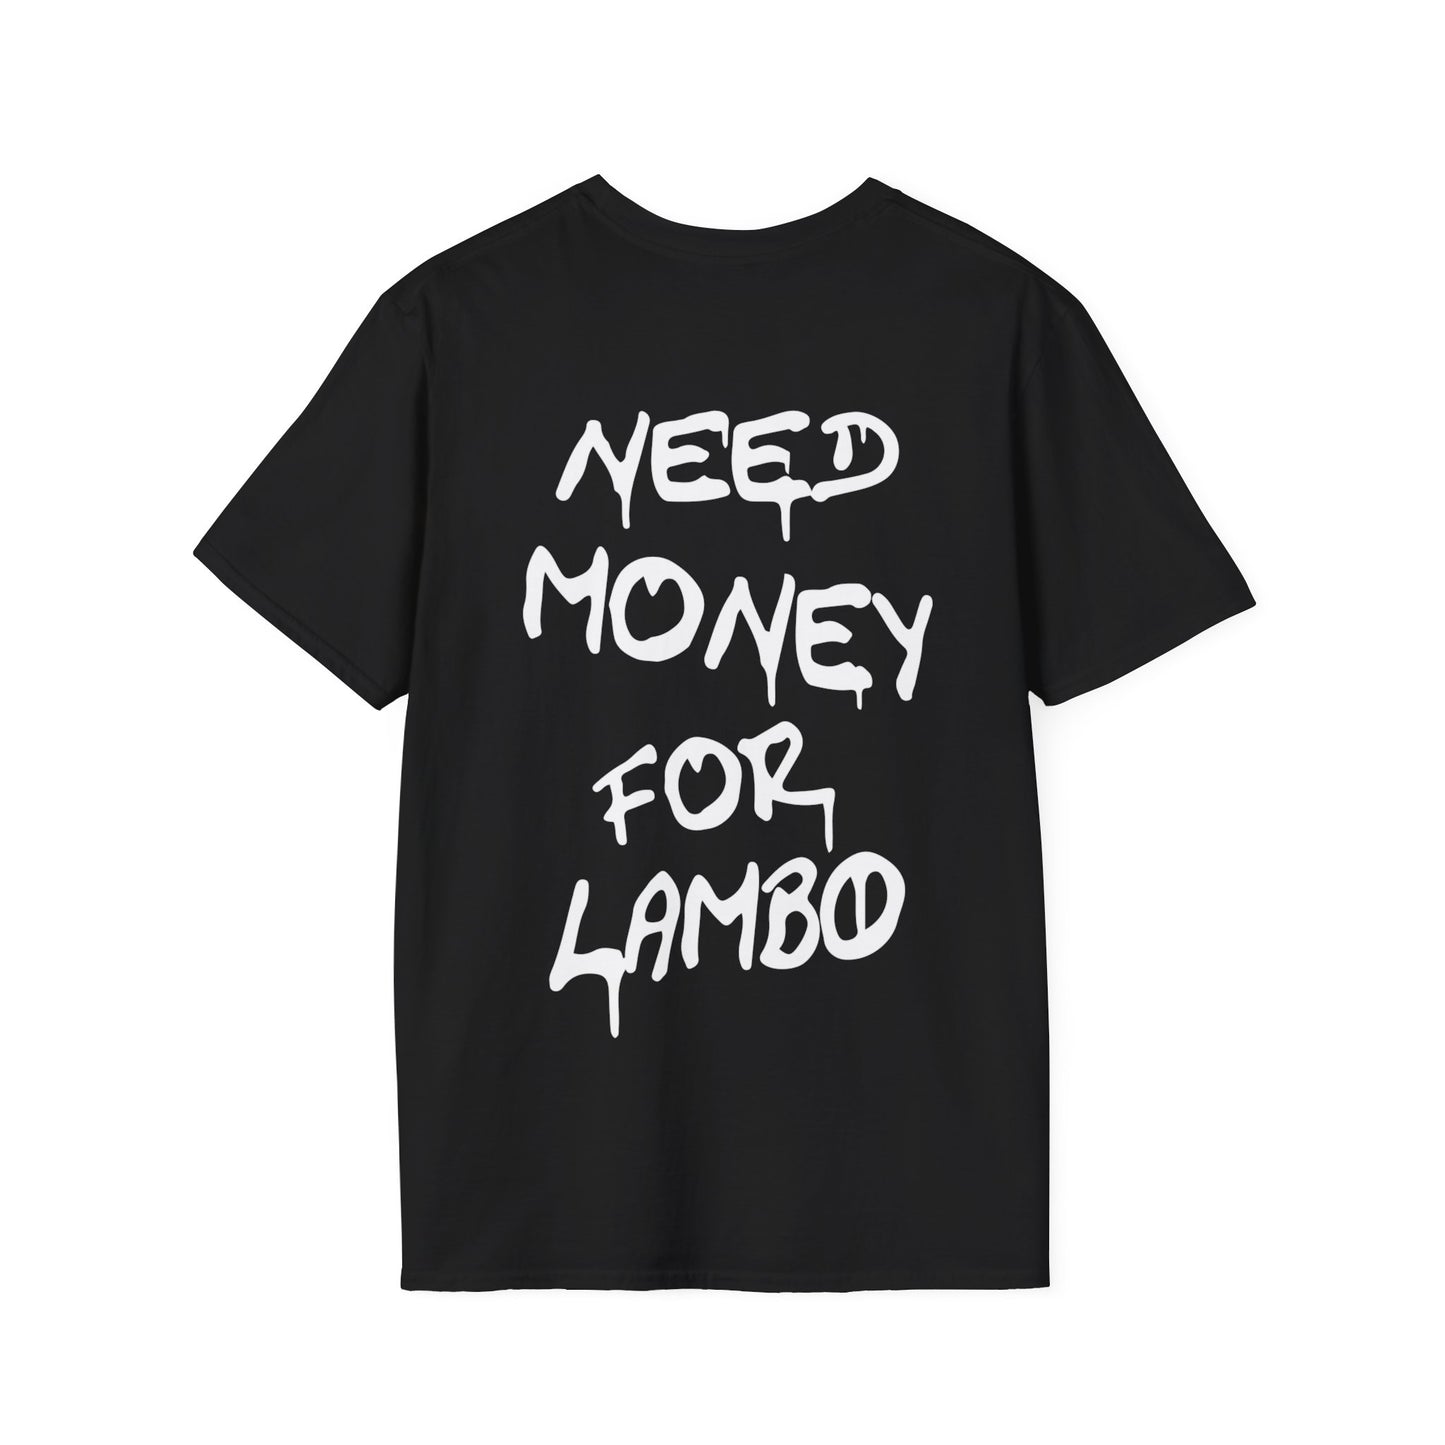 Need Money For Lambo - Unisex